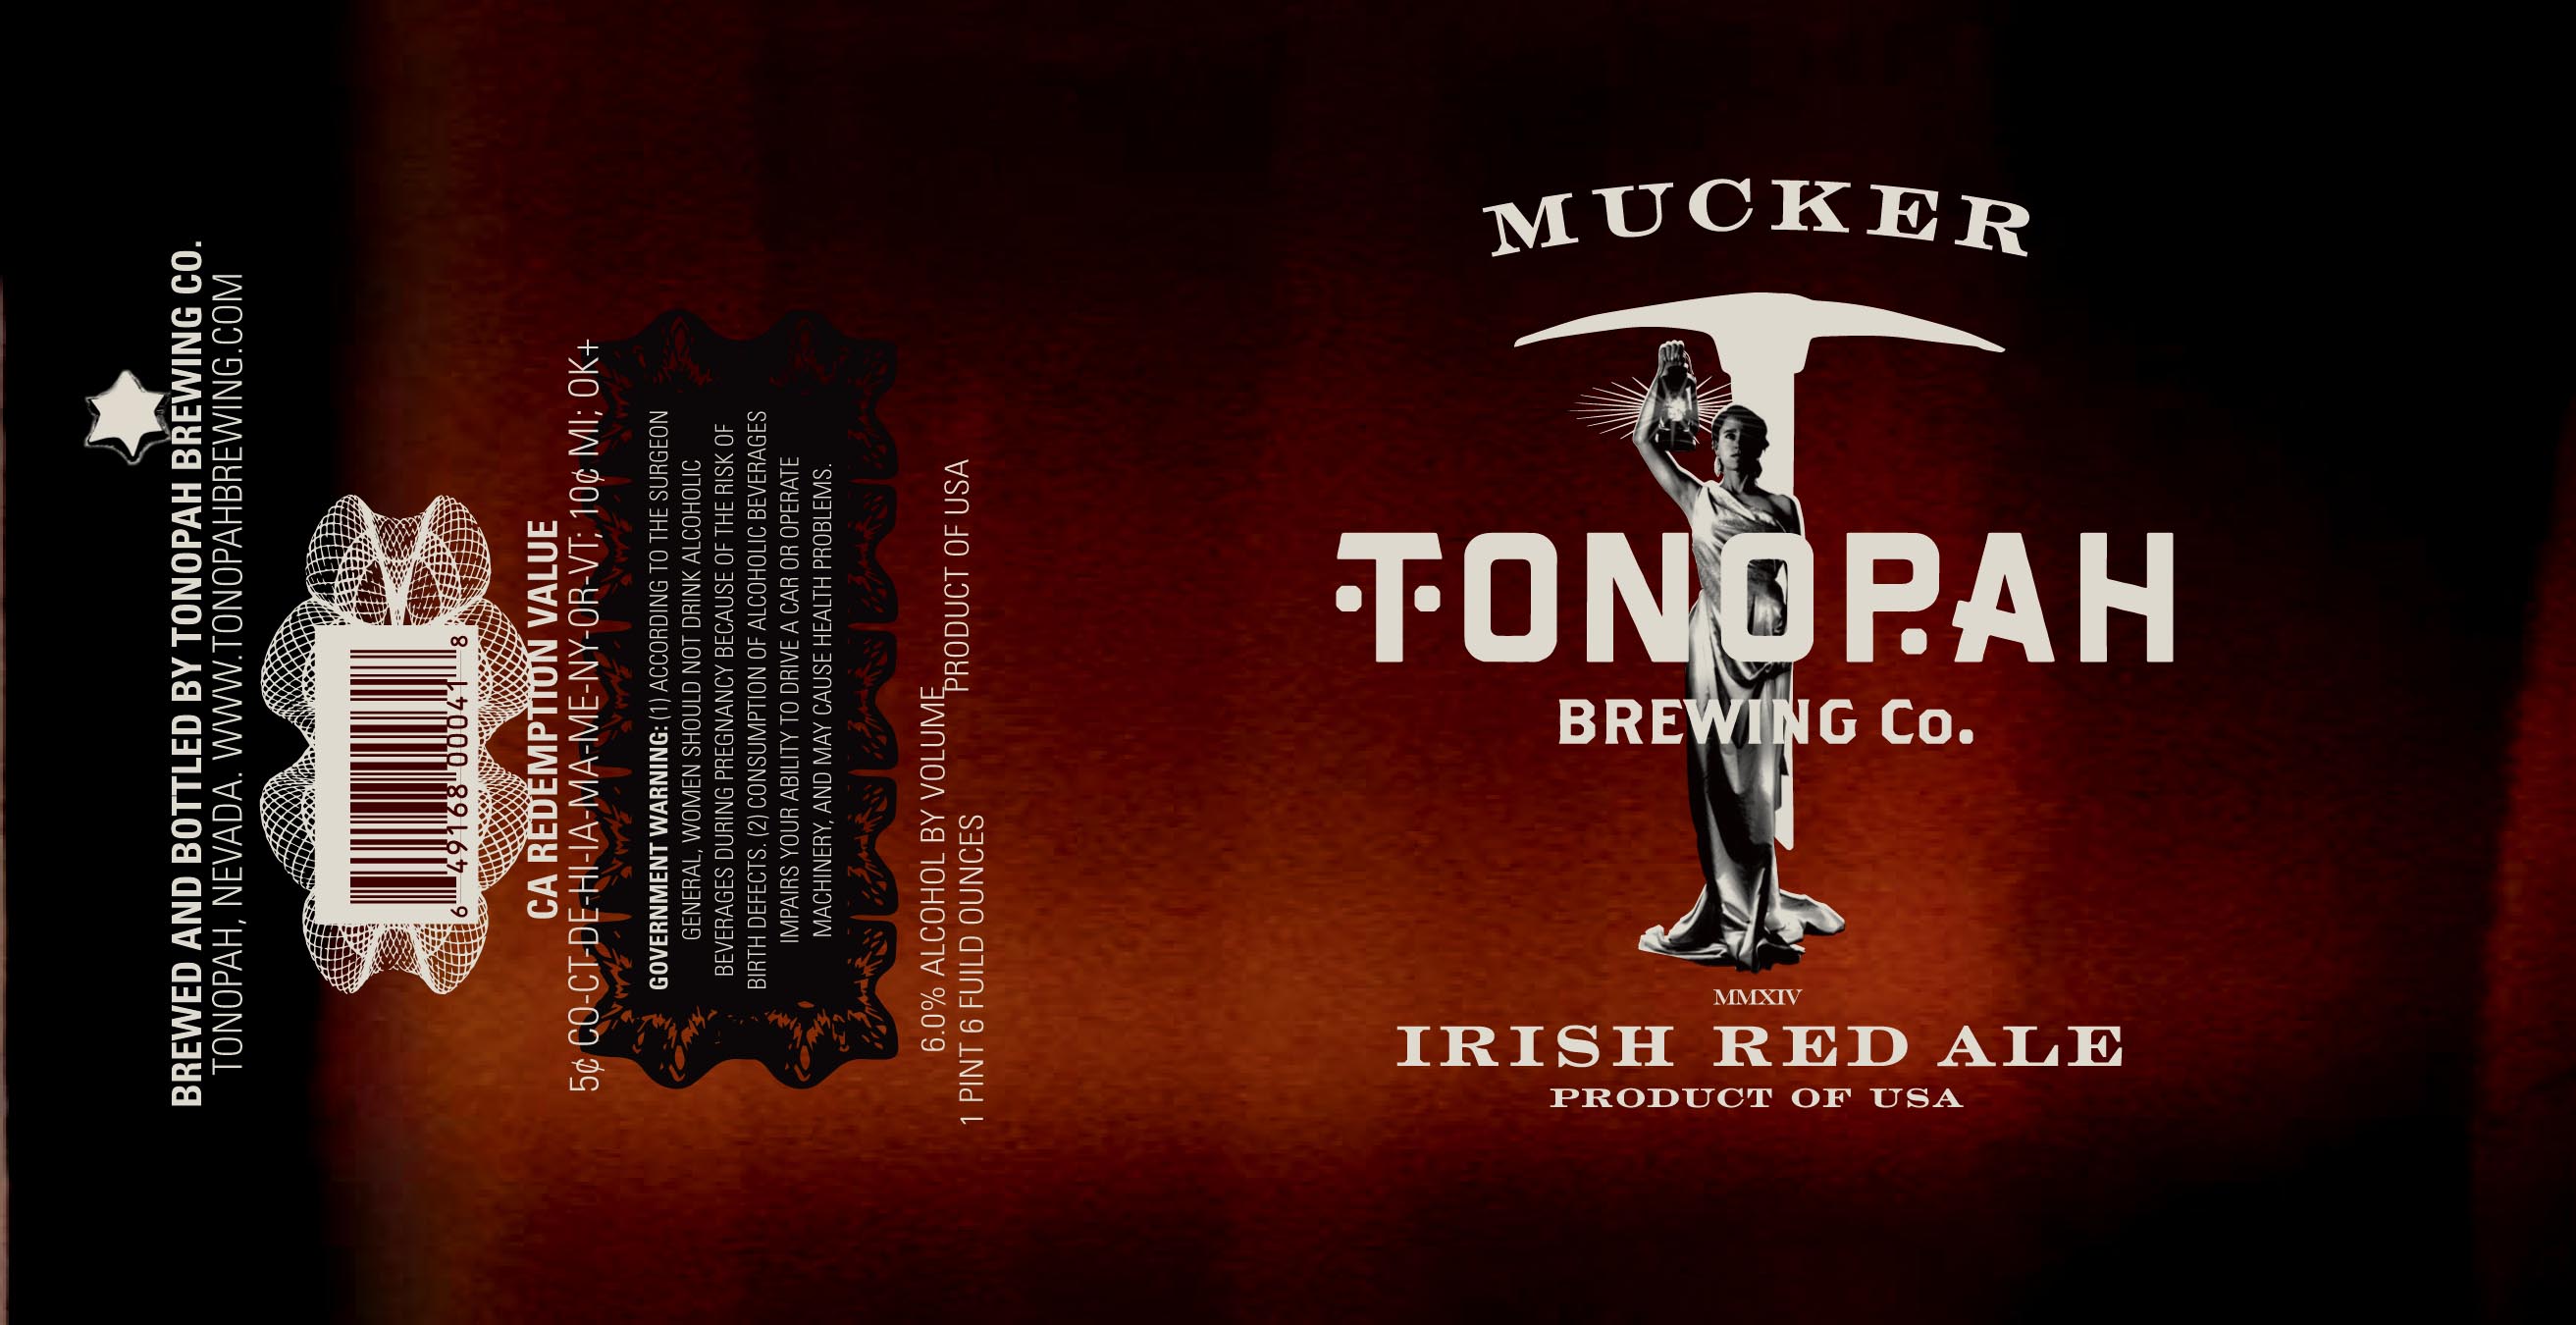 Tonopah Brewing Mucker Irish Red Ale